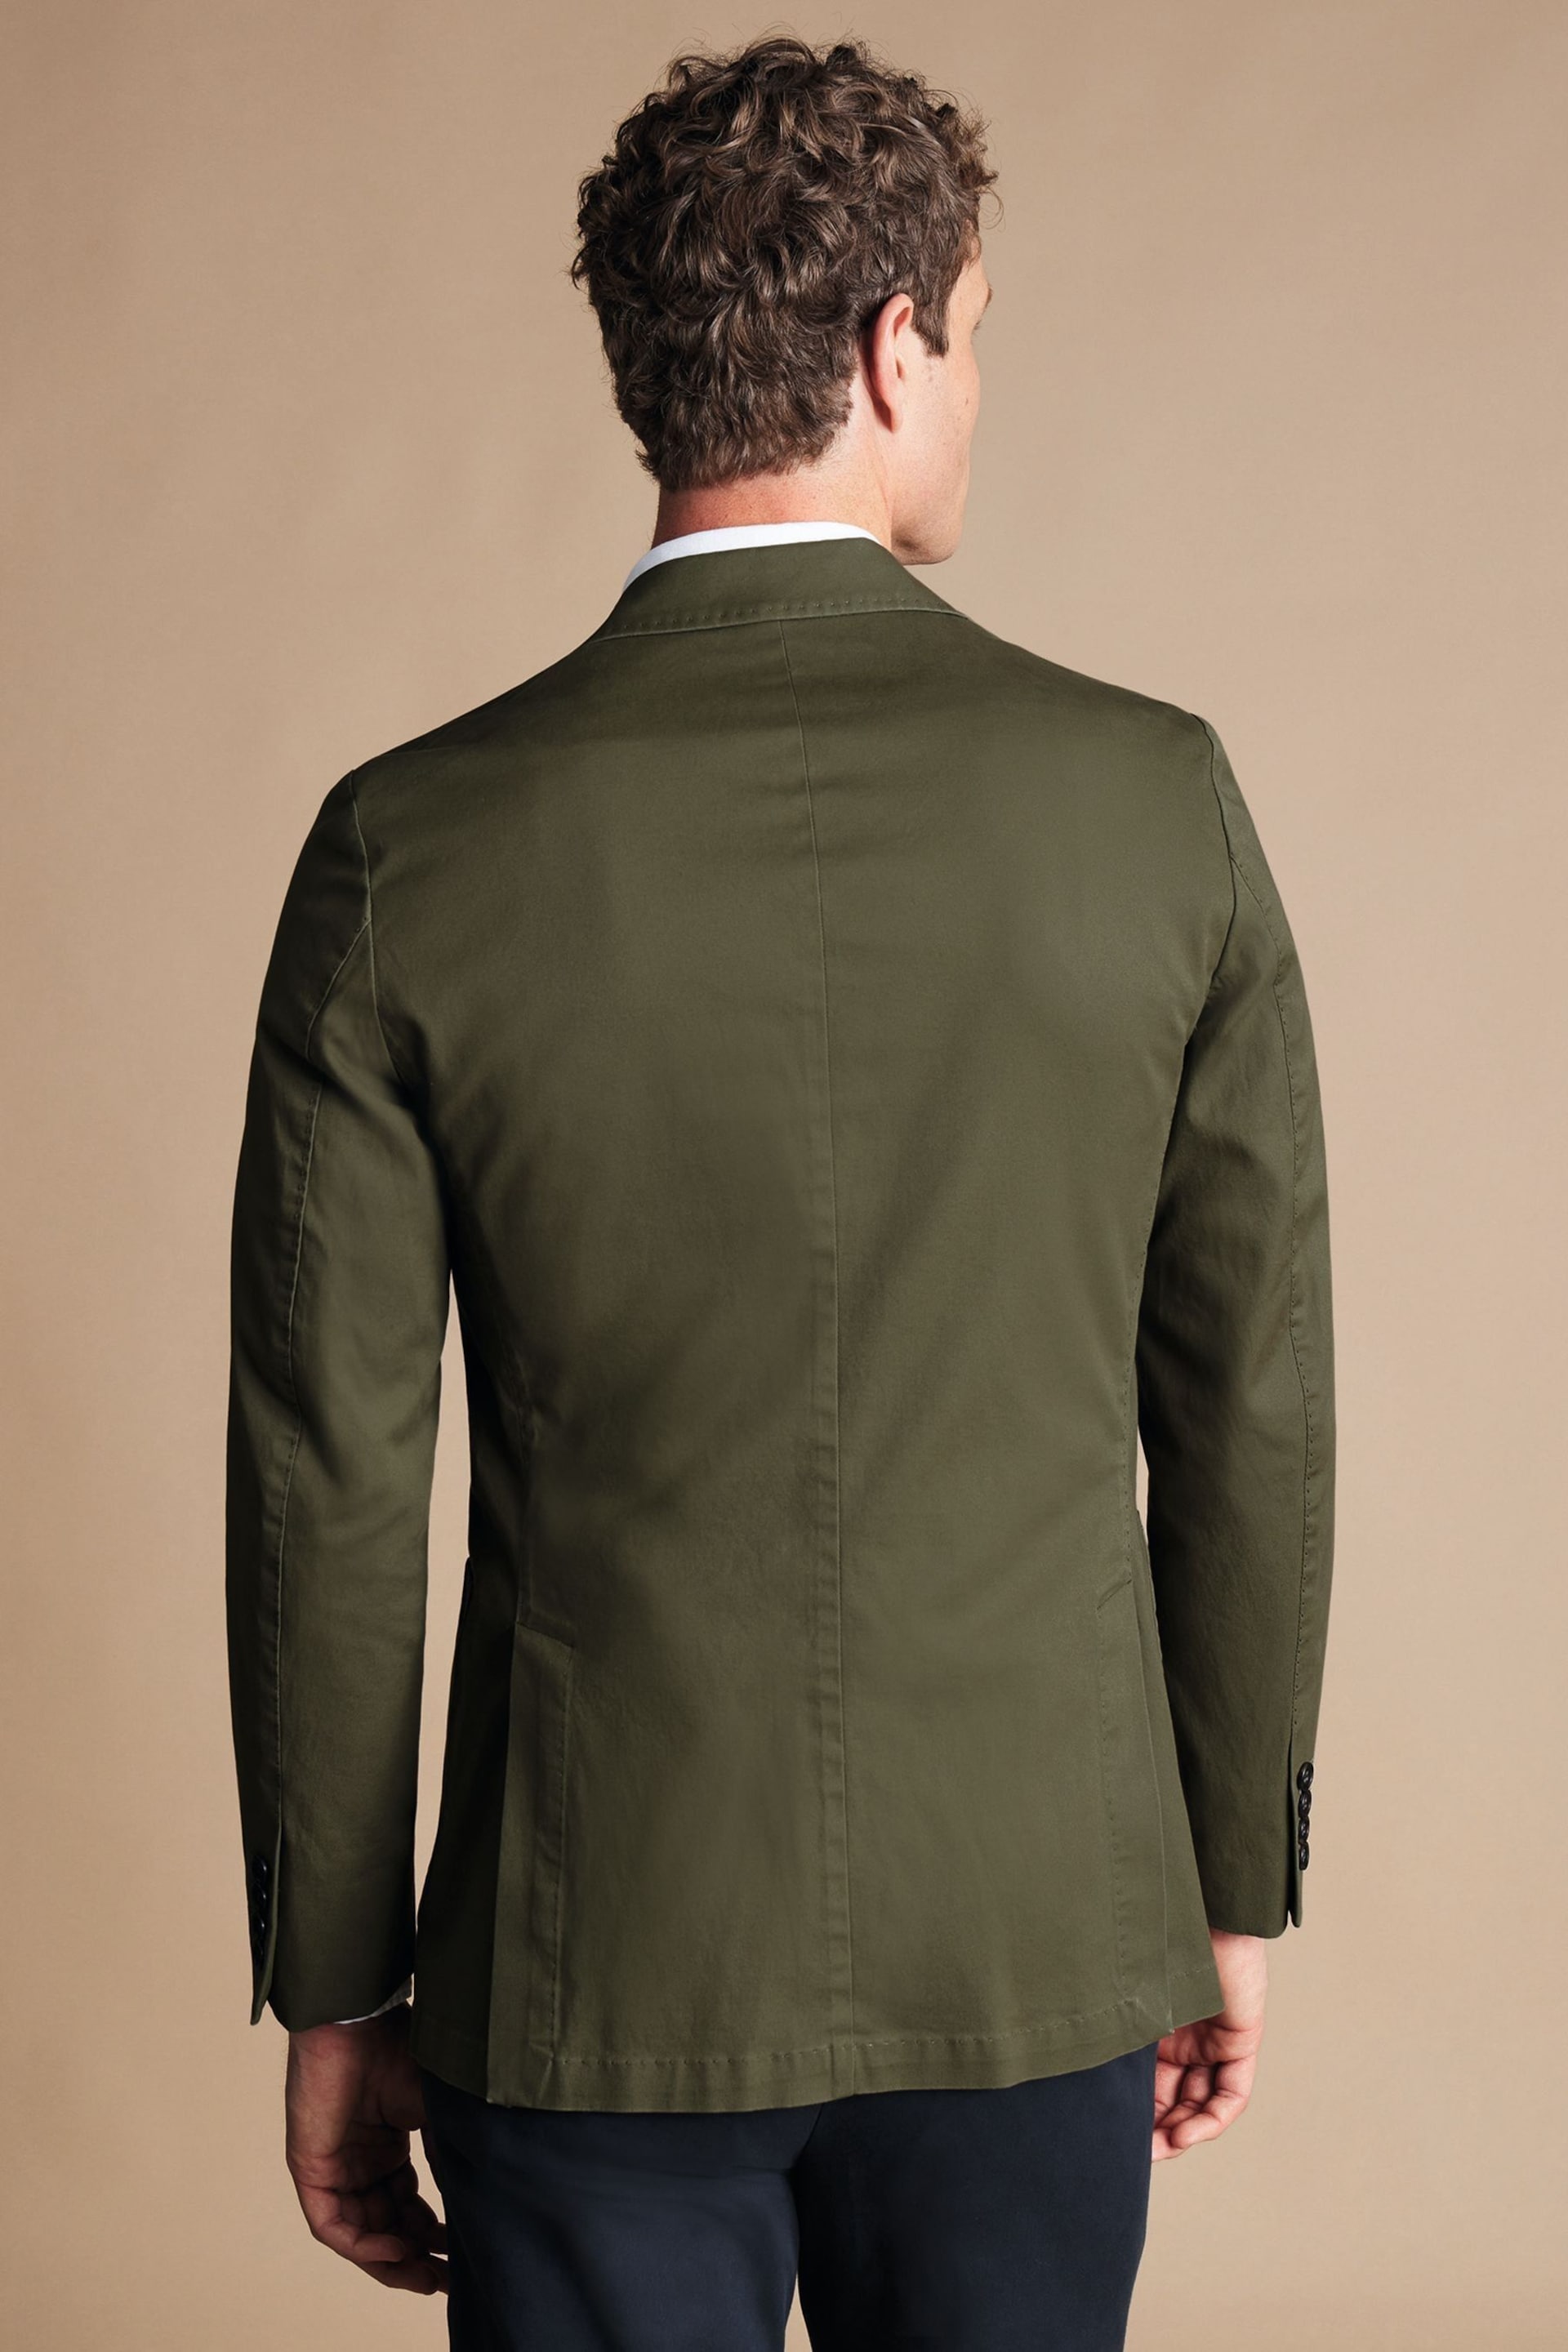 Charles Tyrwhitt Green Cotton Stretch Jacket - Image 2 of 5